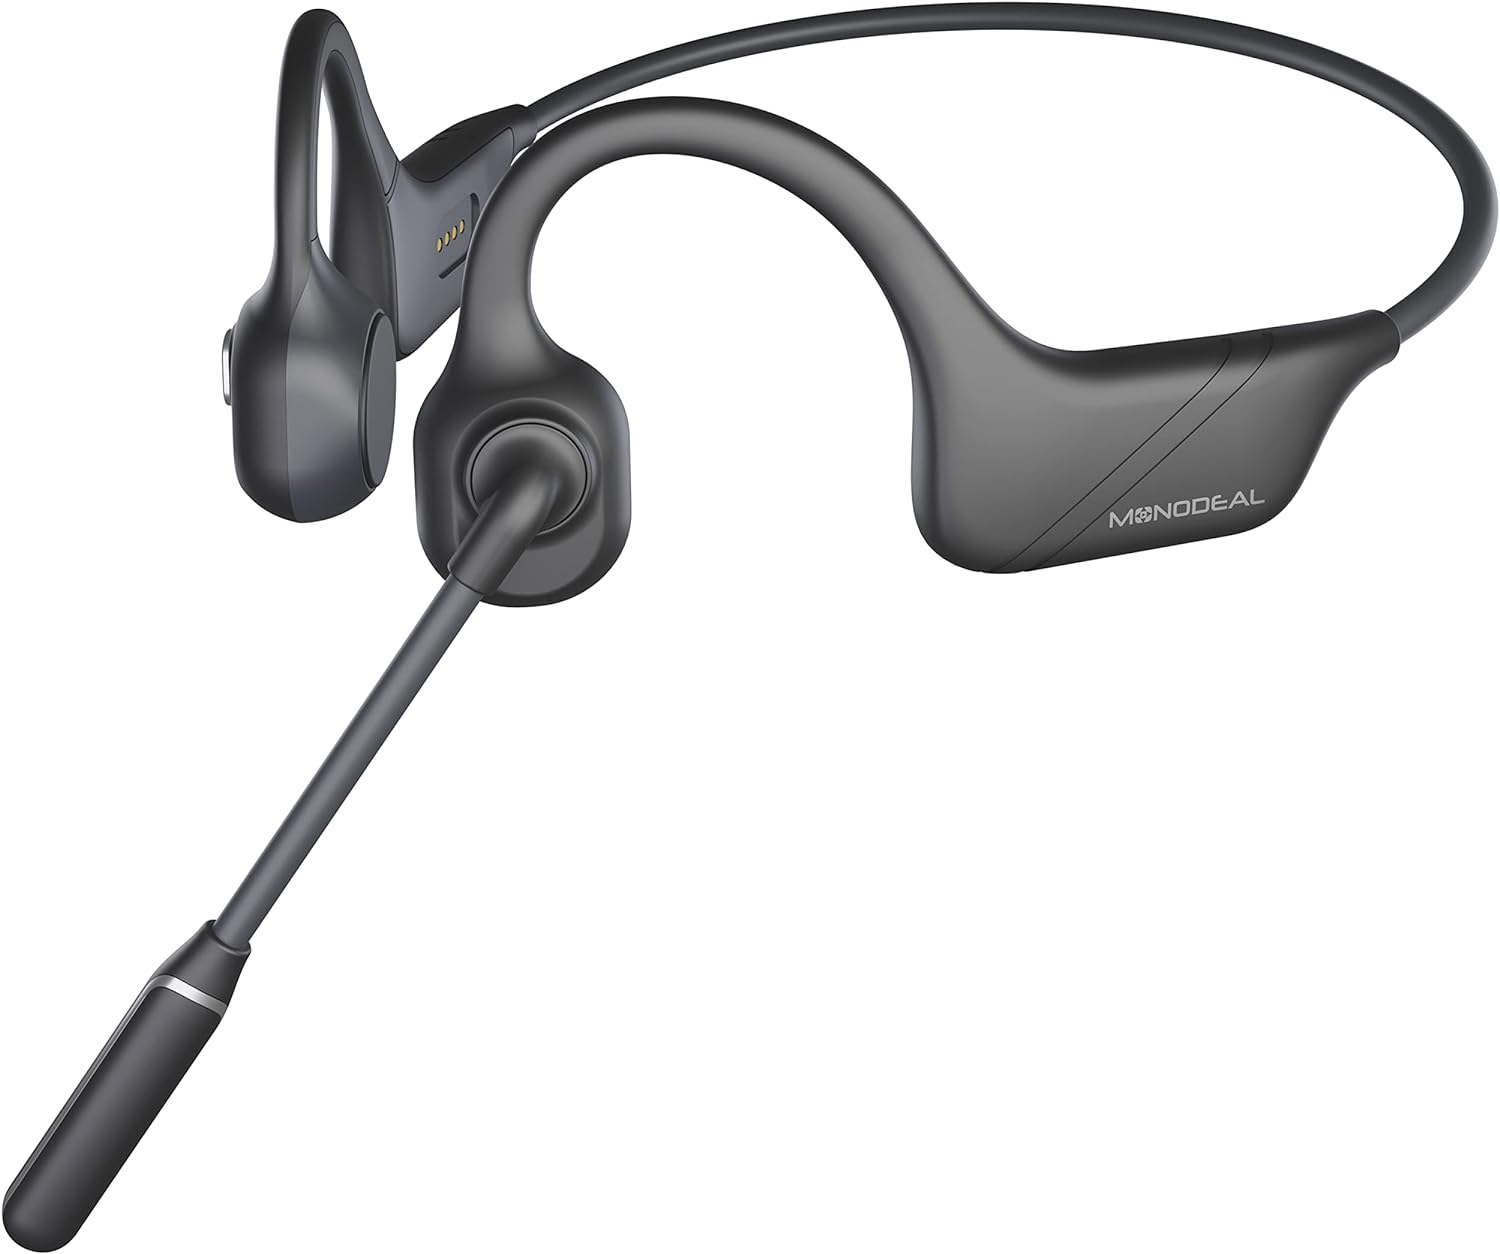 Monodeal Bone Conduction Headphones Review: Lightweight and Versatile